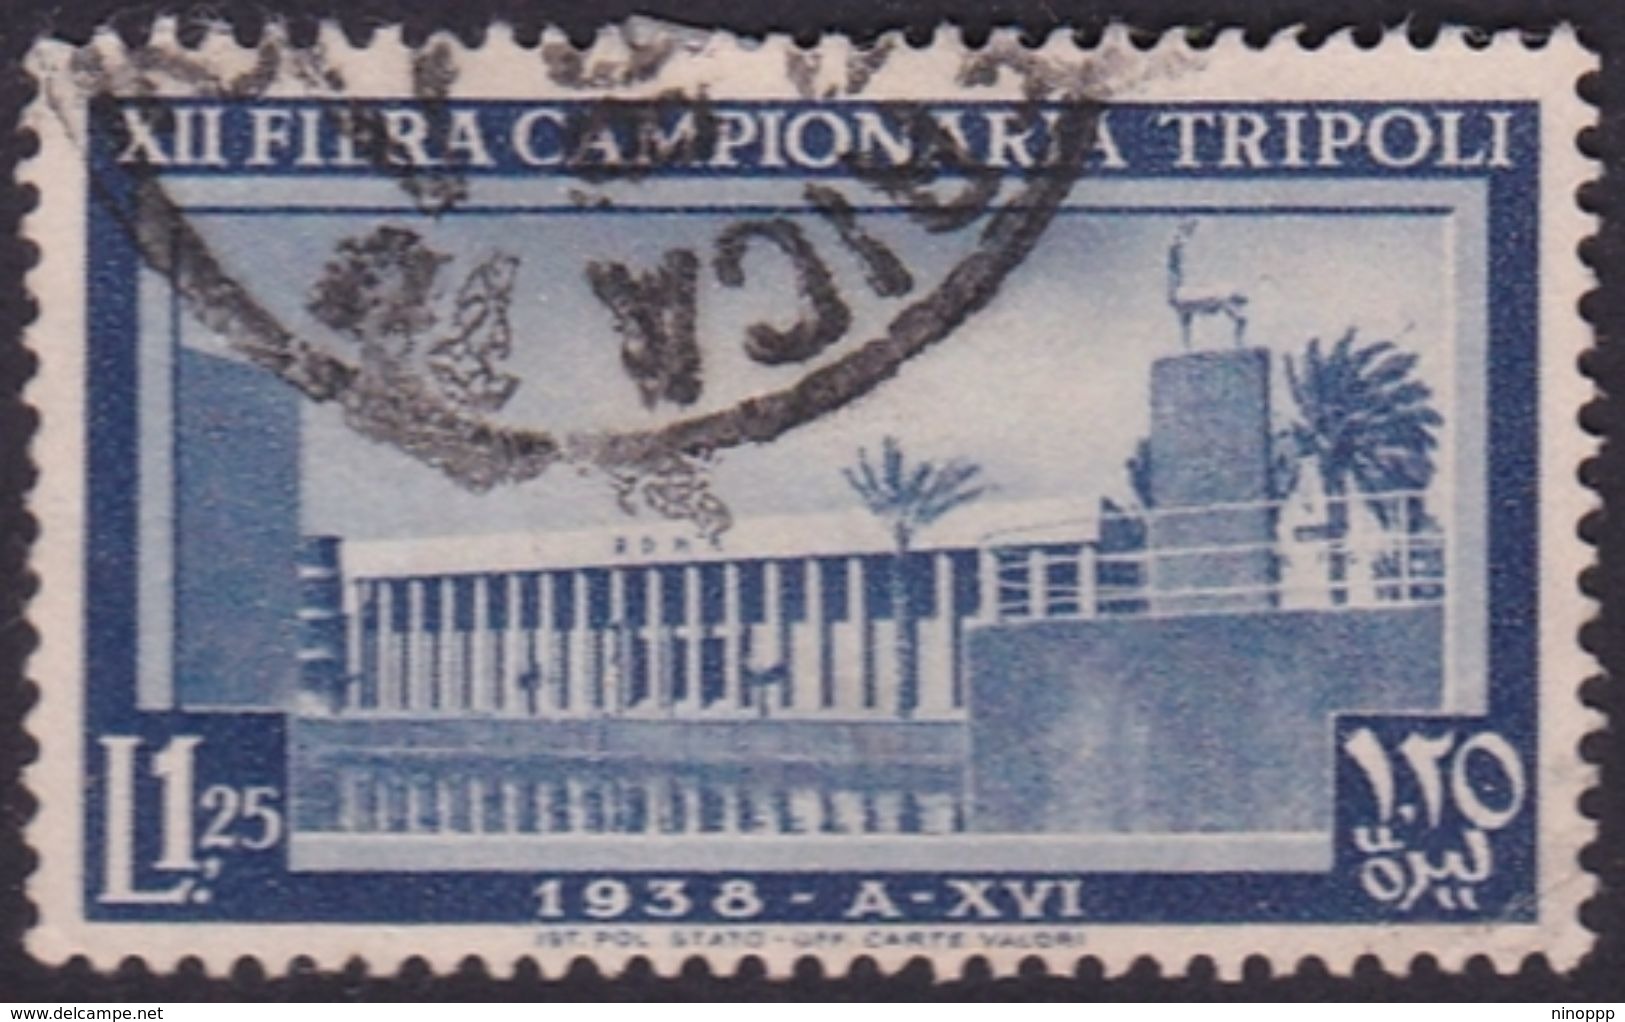 Italy-Colonies And Territories-Libya S 151 1938 12th Tripoli Fair,1,25 Lira Gray Blue,used - Libya